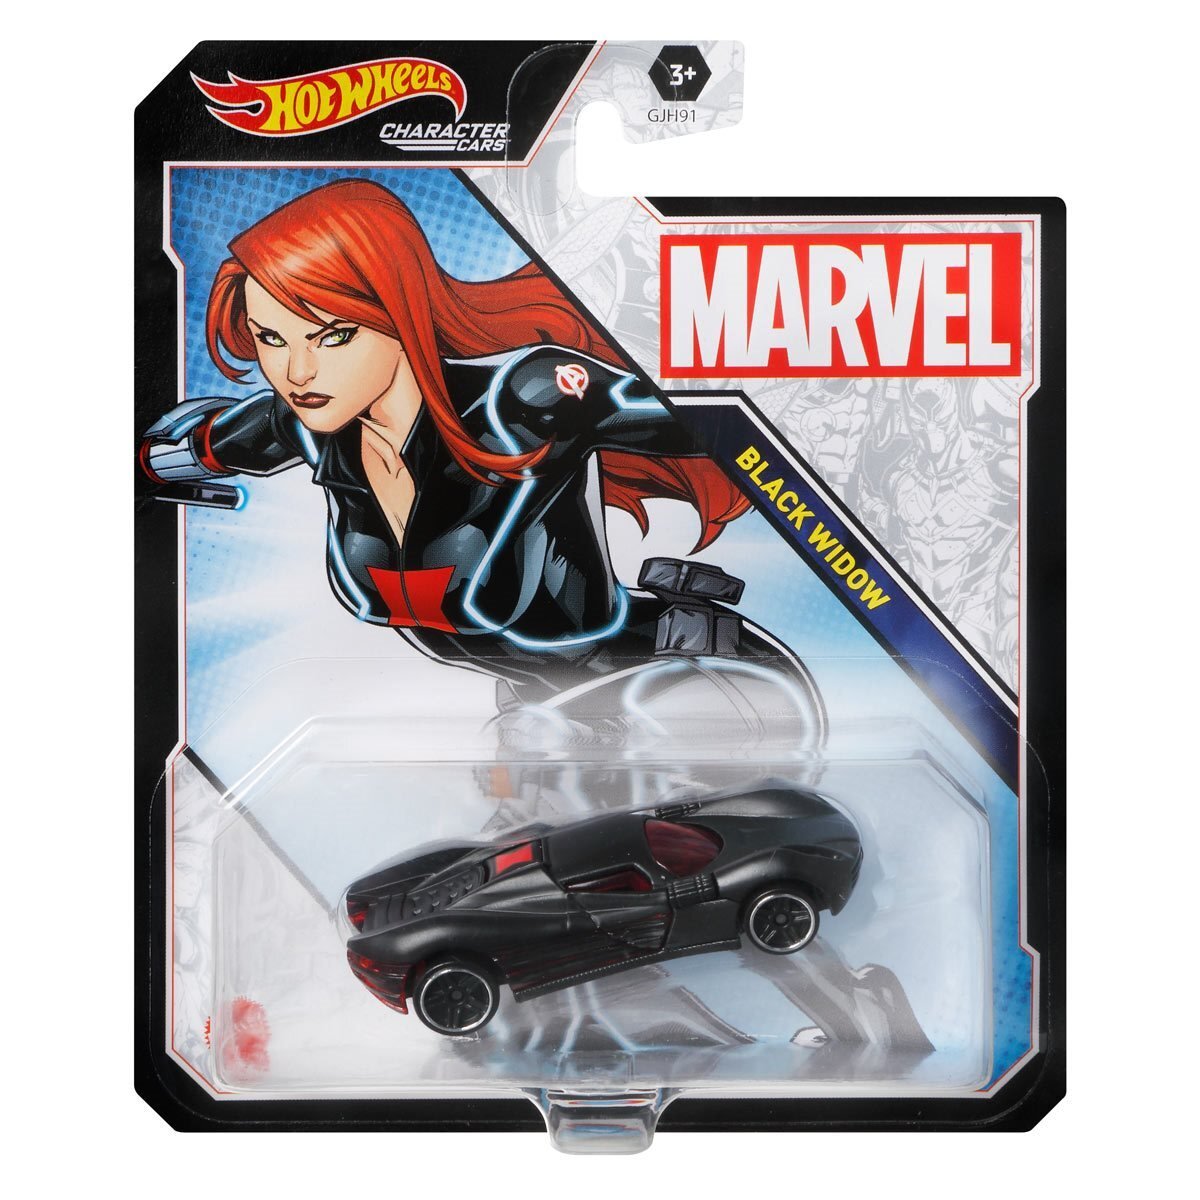 Hot Wheels Studio Character Cars Marvel - Black Widow